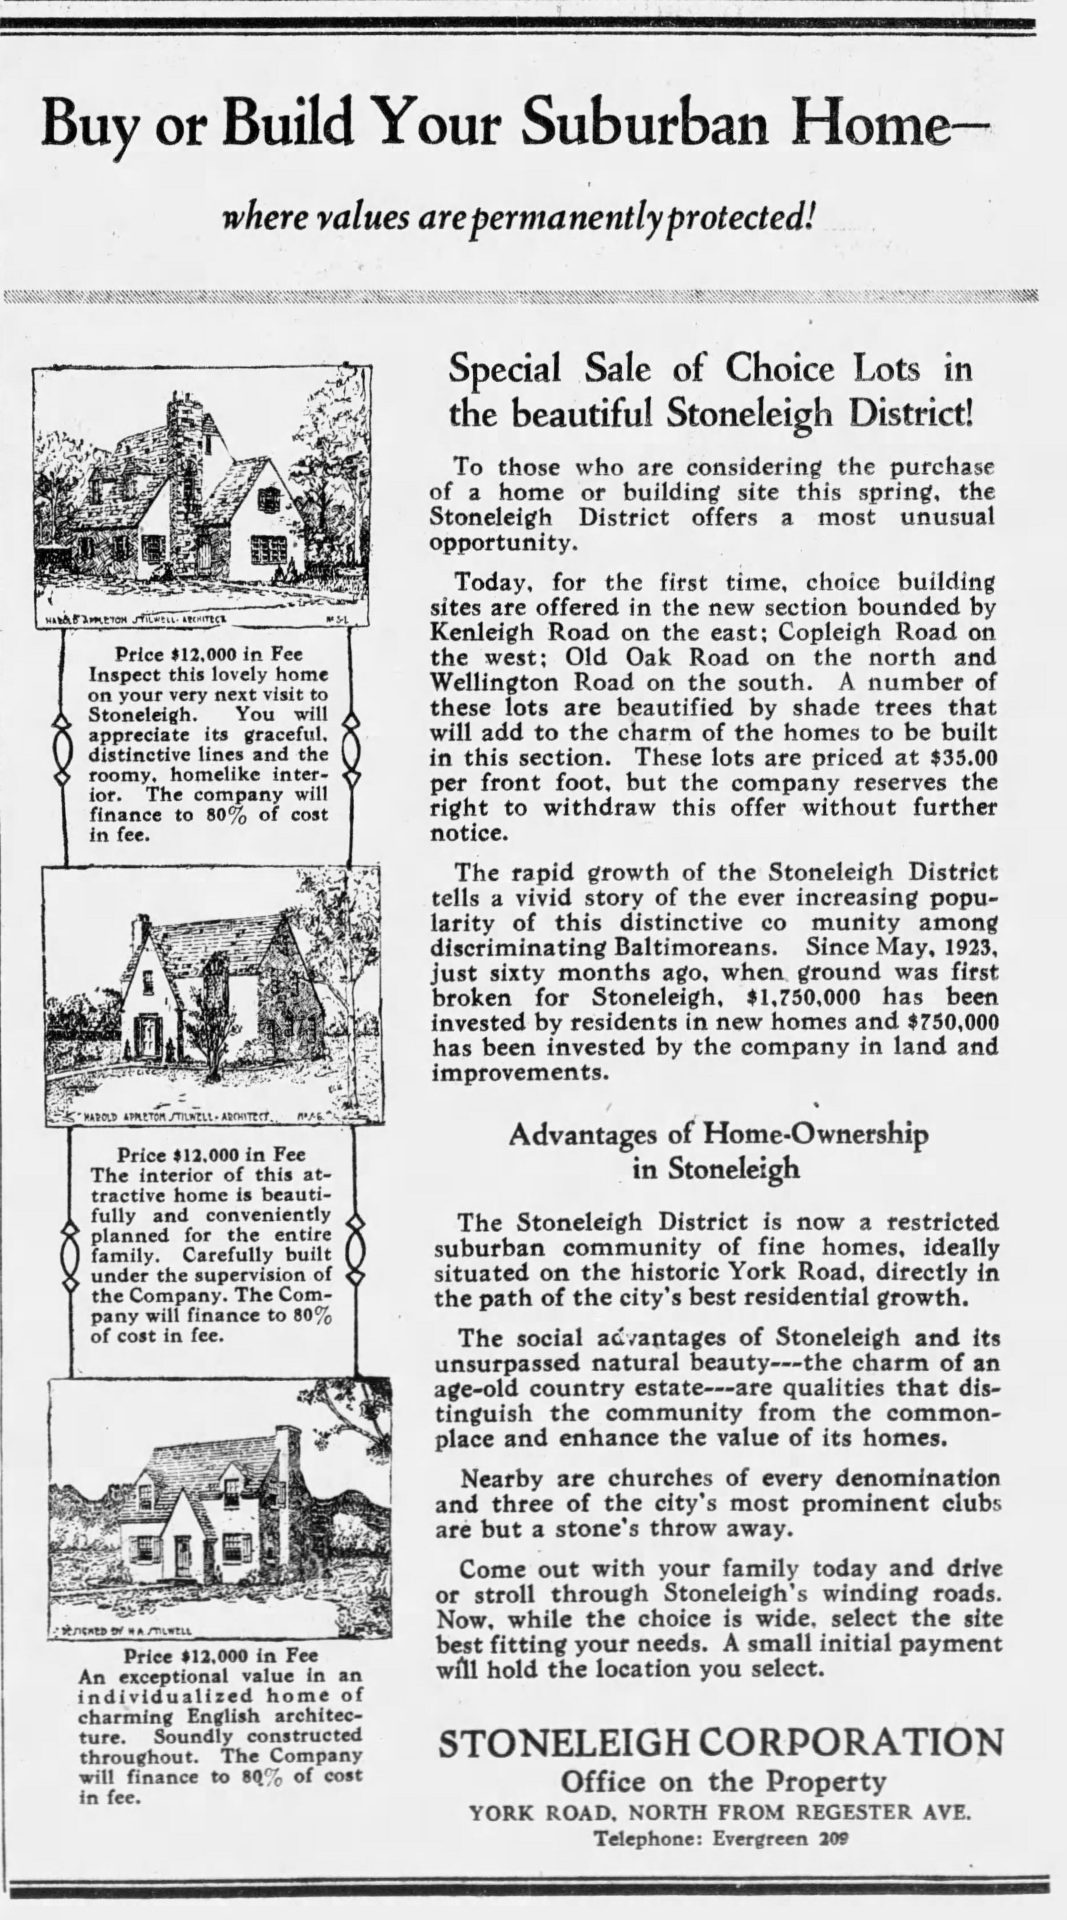 1928 Stoneleigh ad in the Baltimore Sun